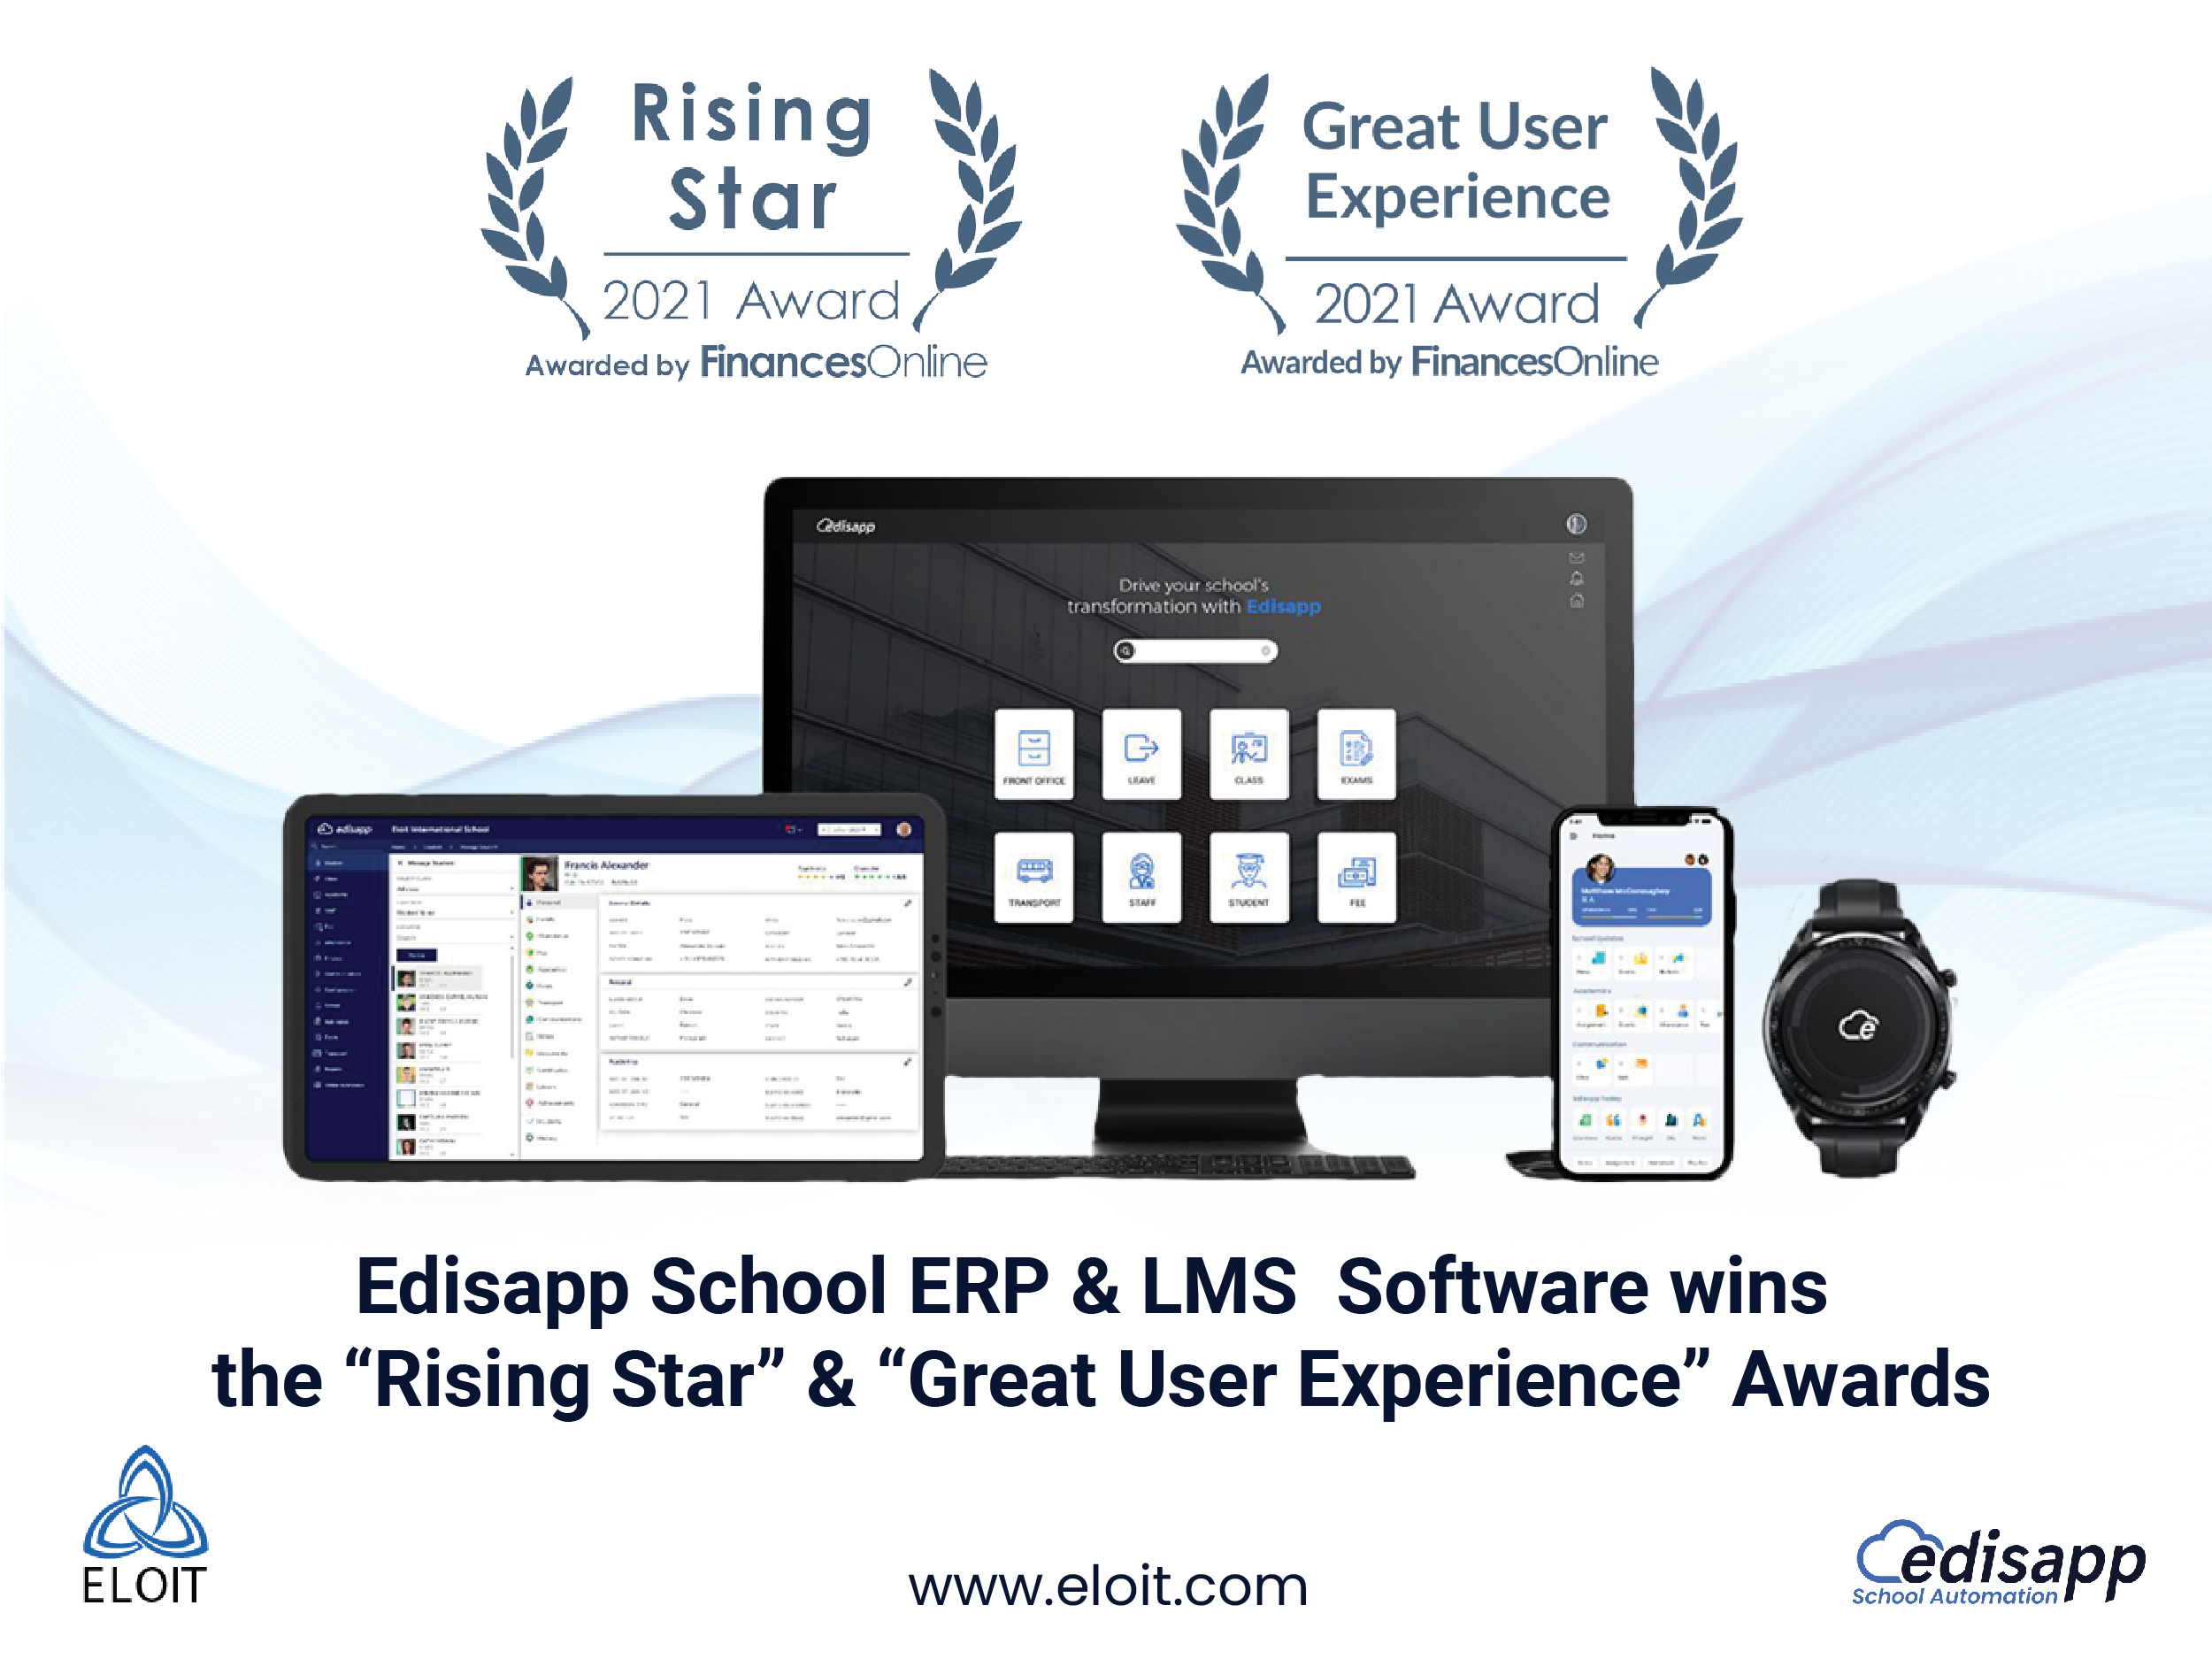 Edisapp School ERP & LMS by Eloit wins 2 Awards from FinancesOnline for 2021